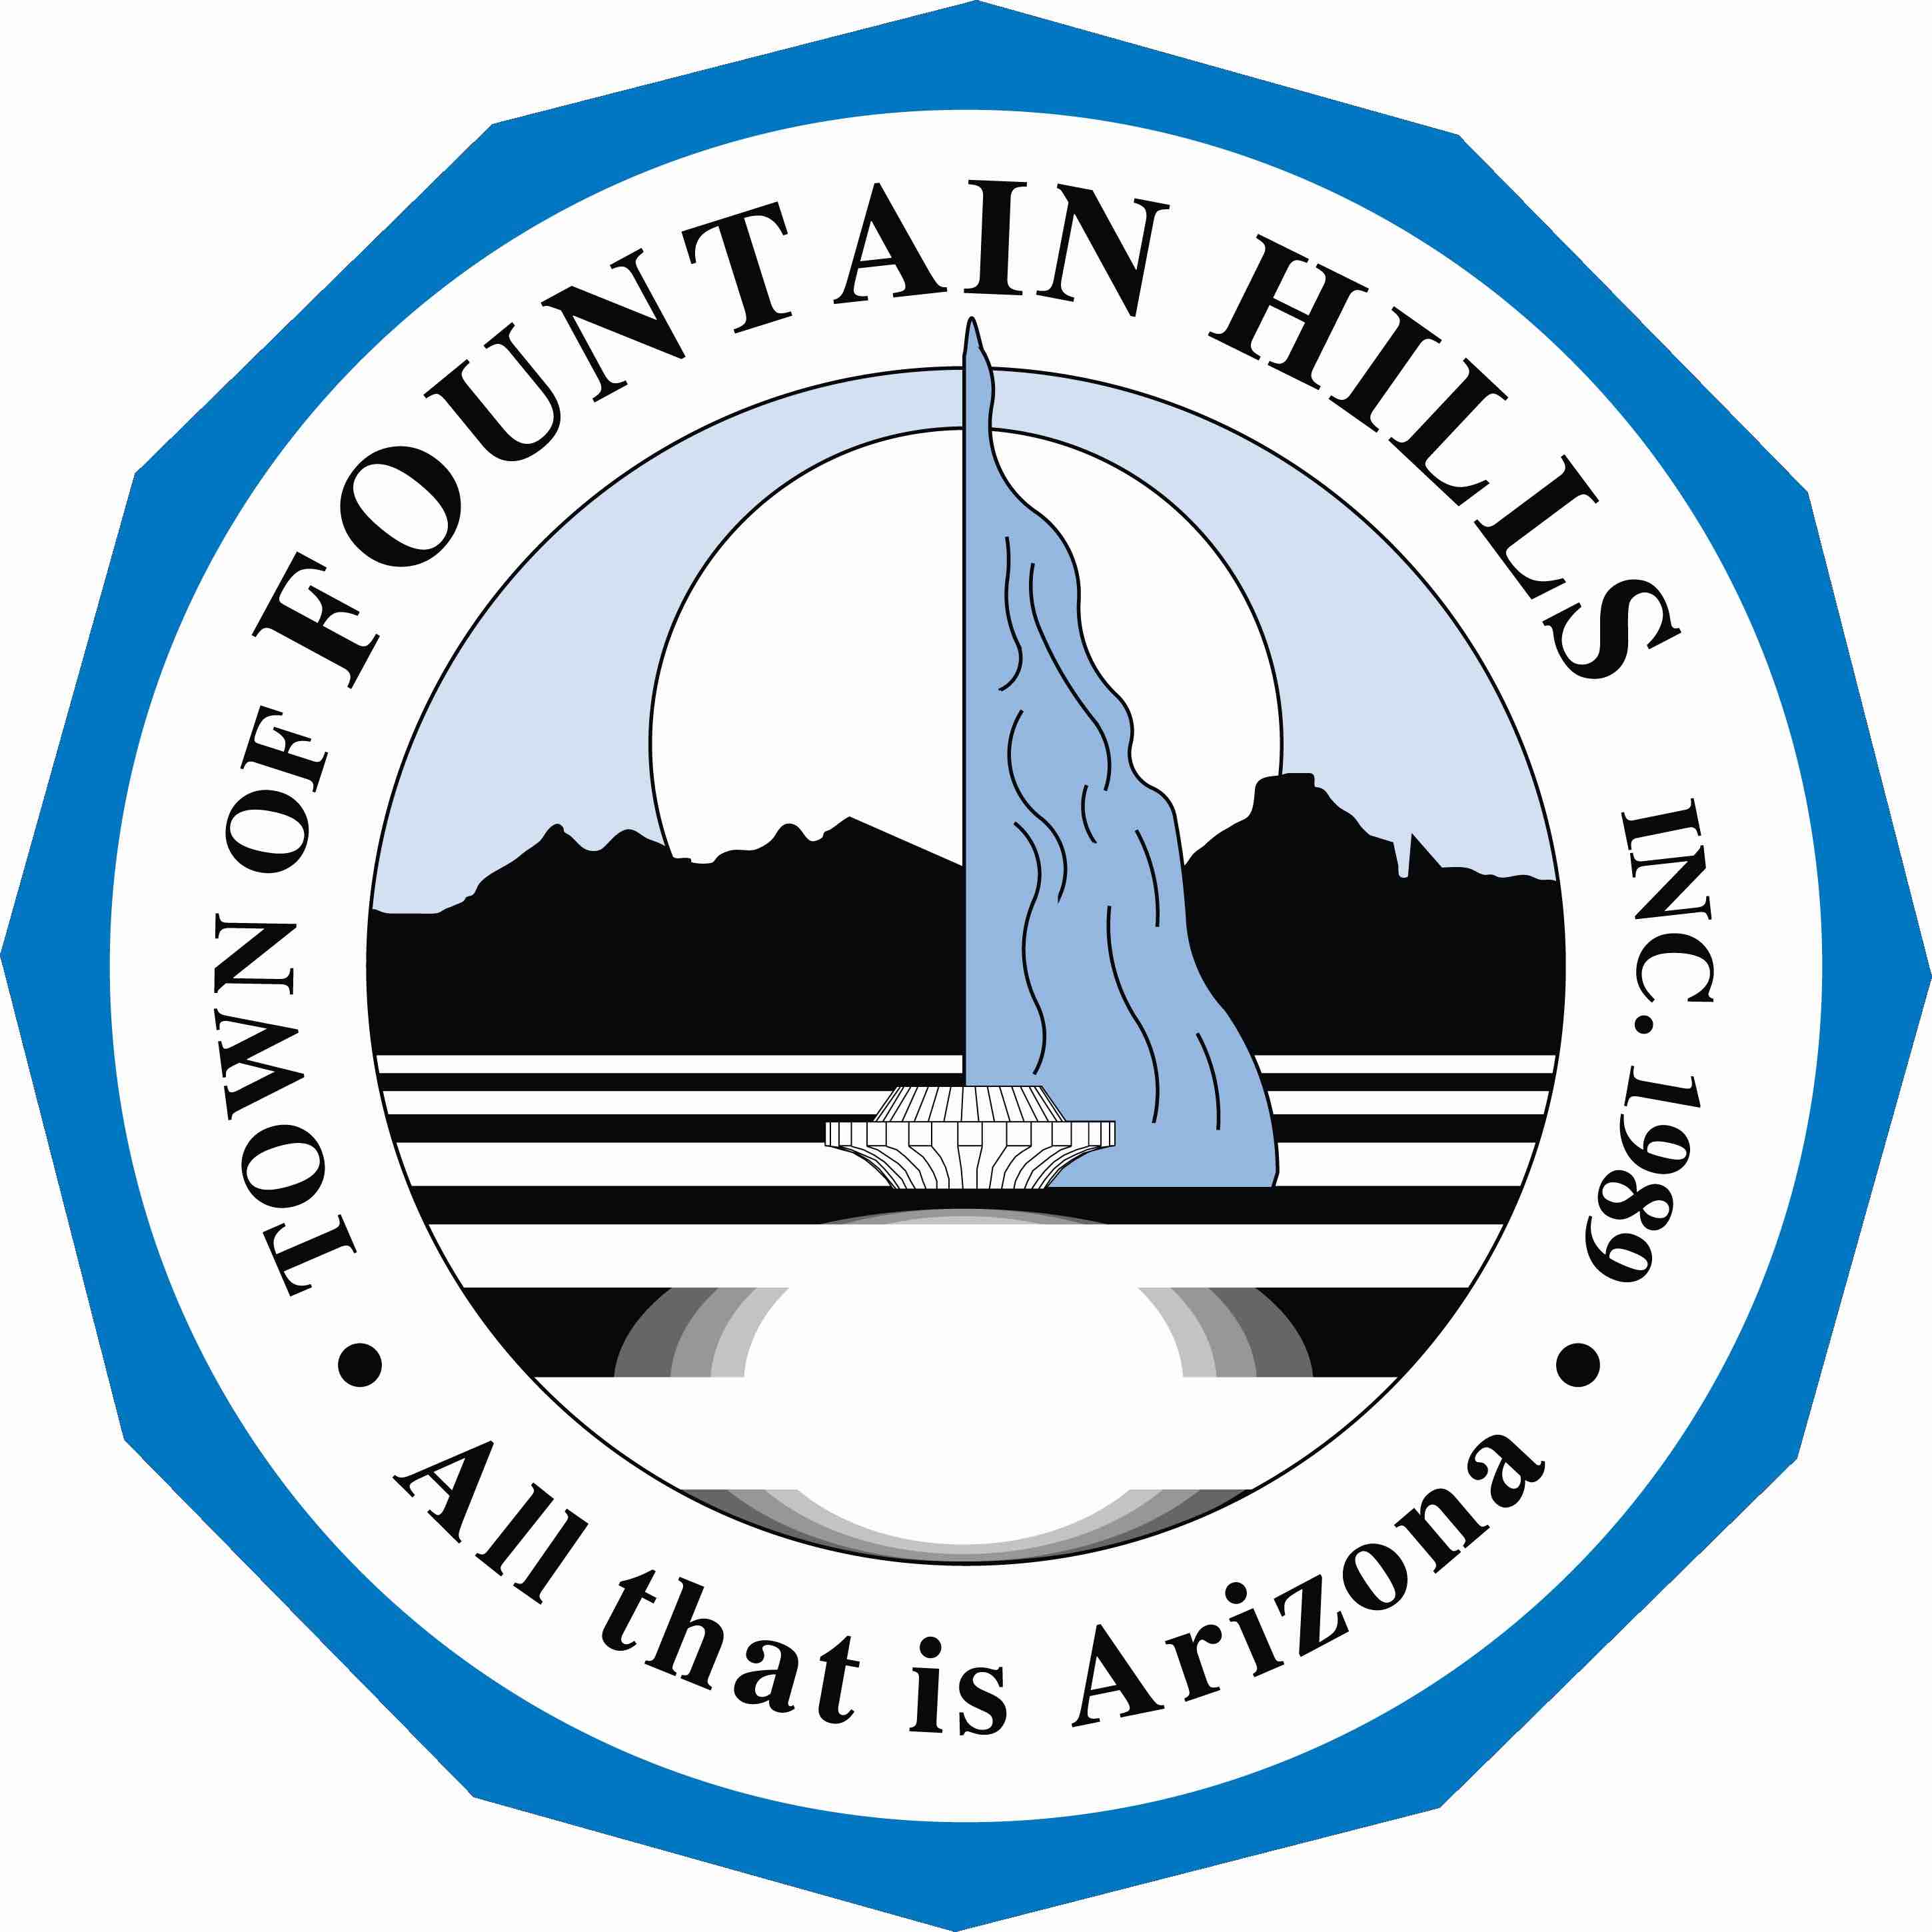 Town of Fountain Hills logo